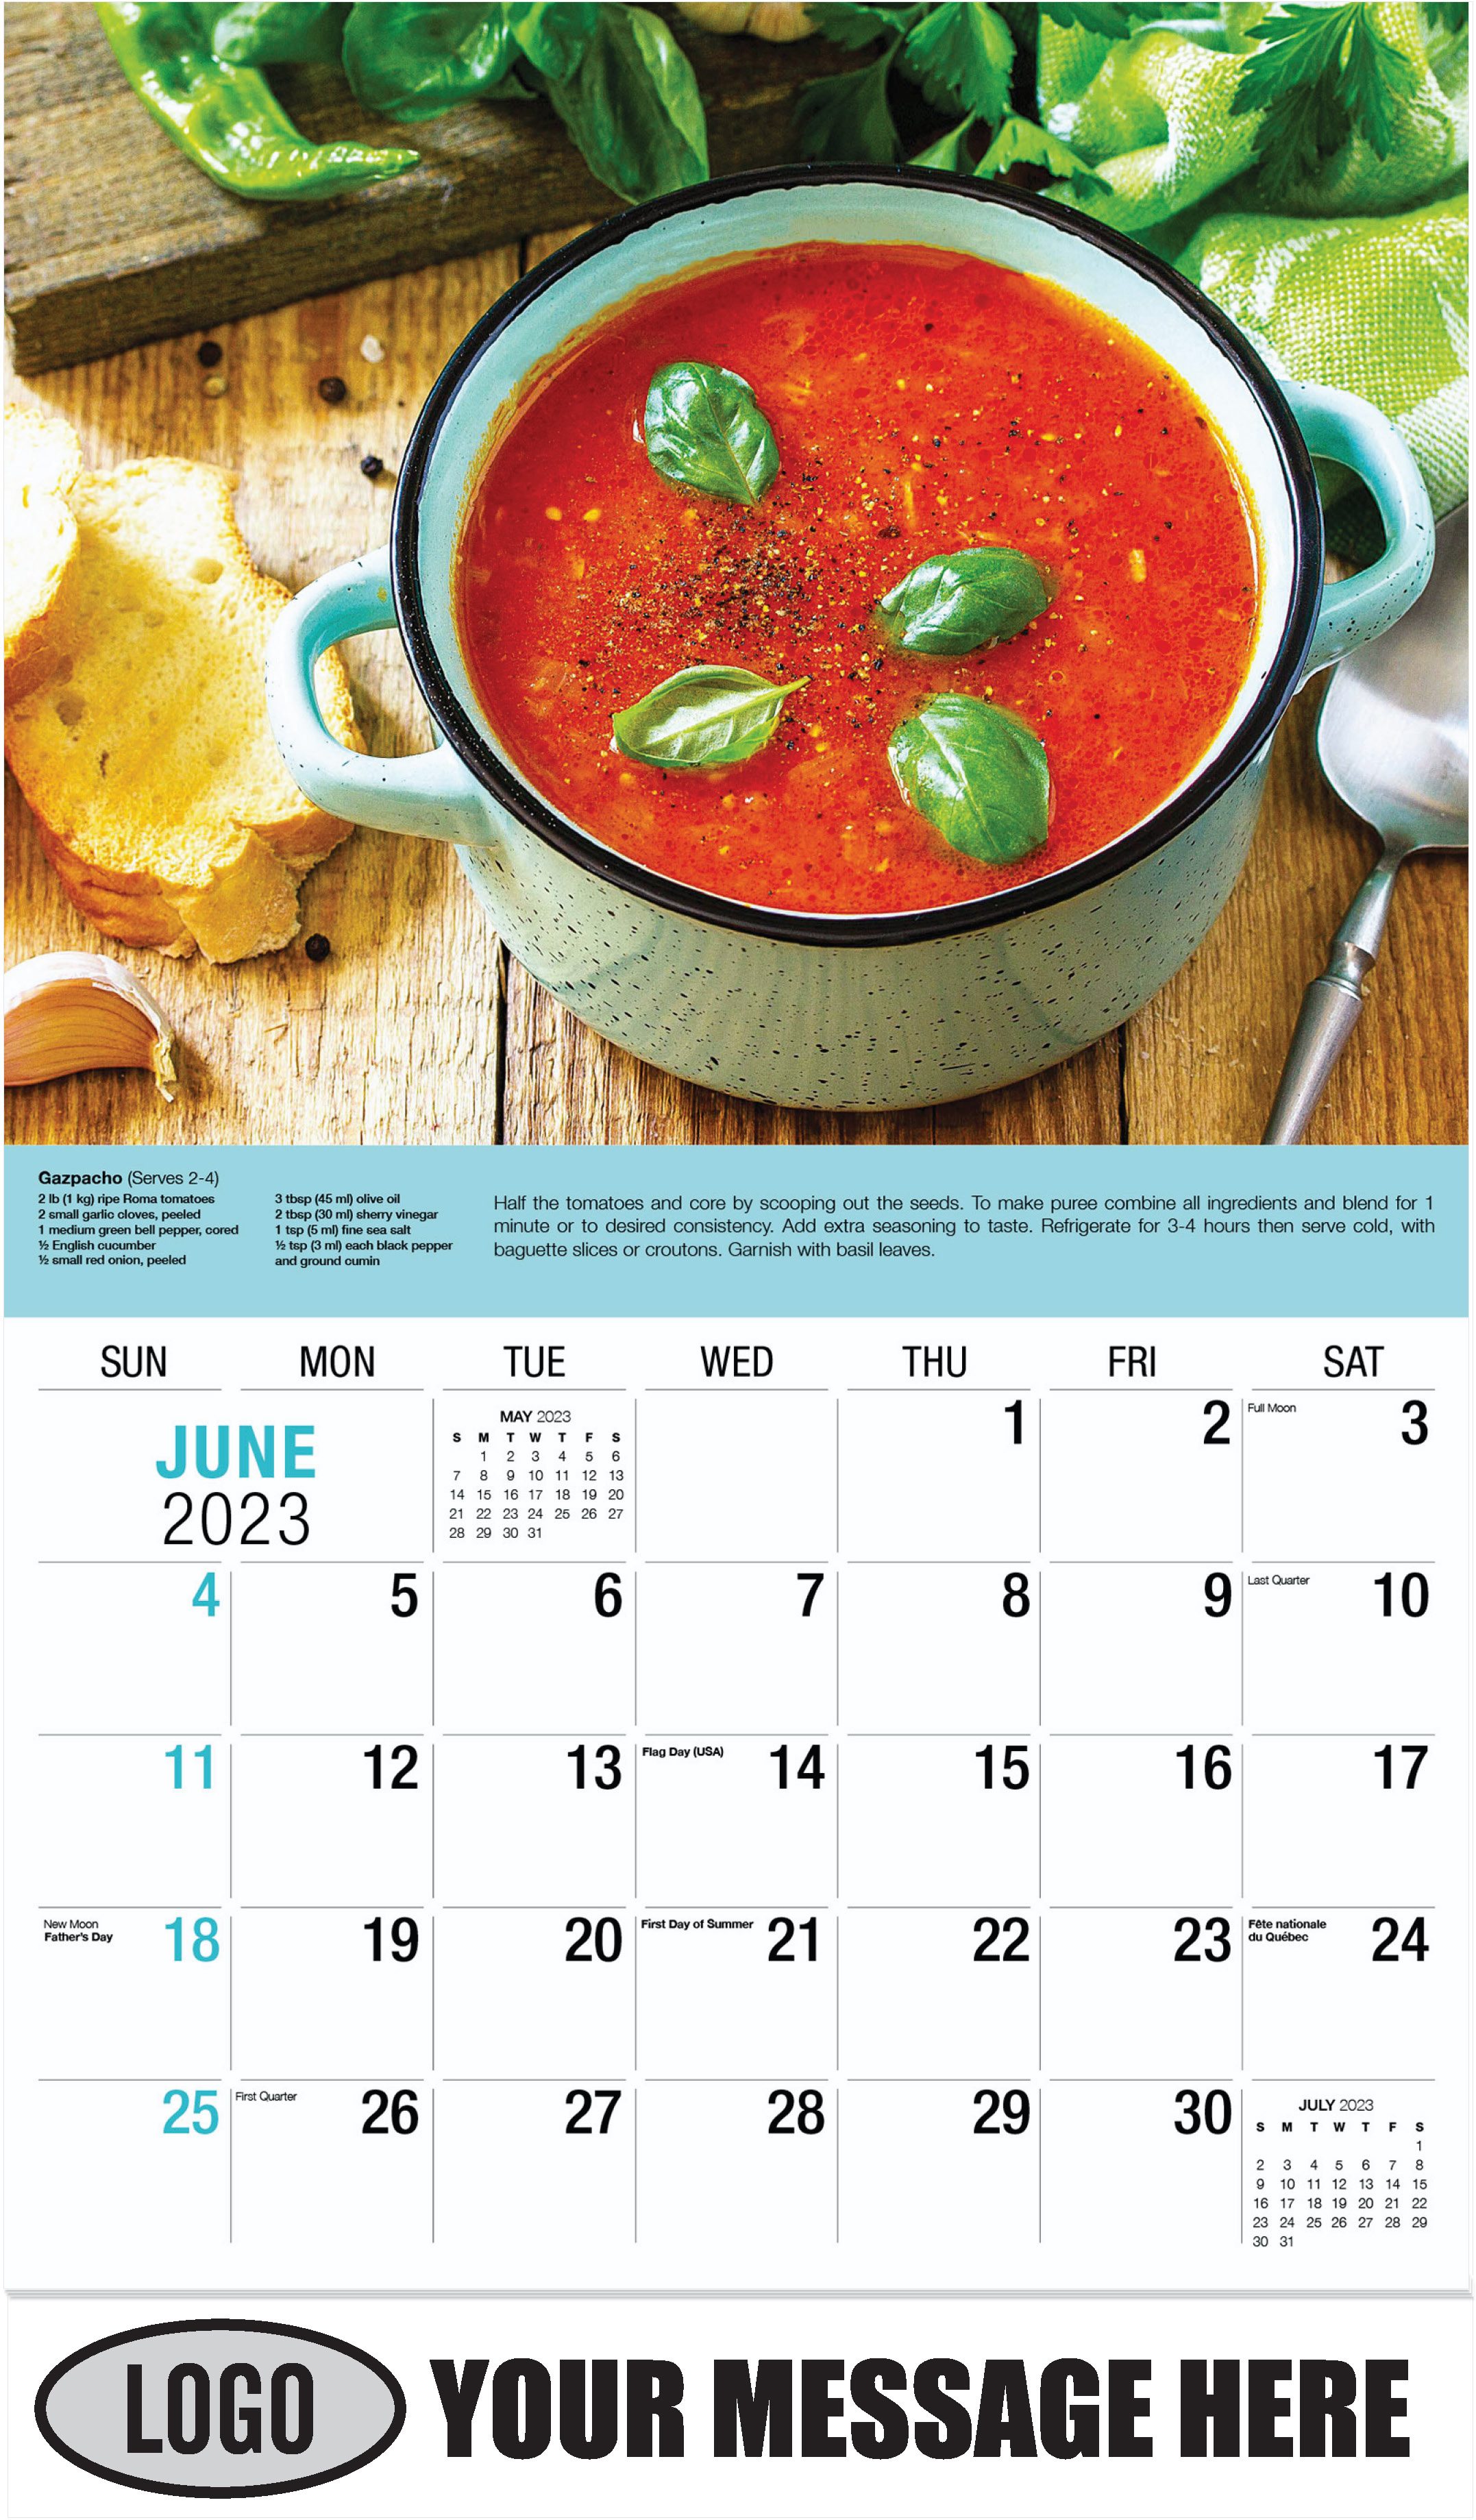 June - Recipes 2023 Promotional Calendar